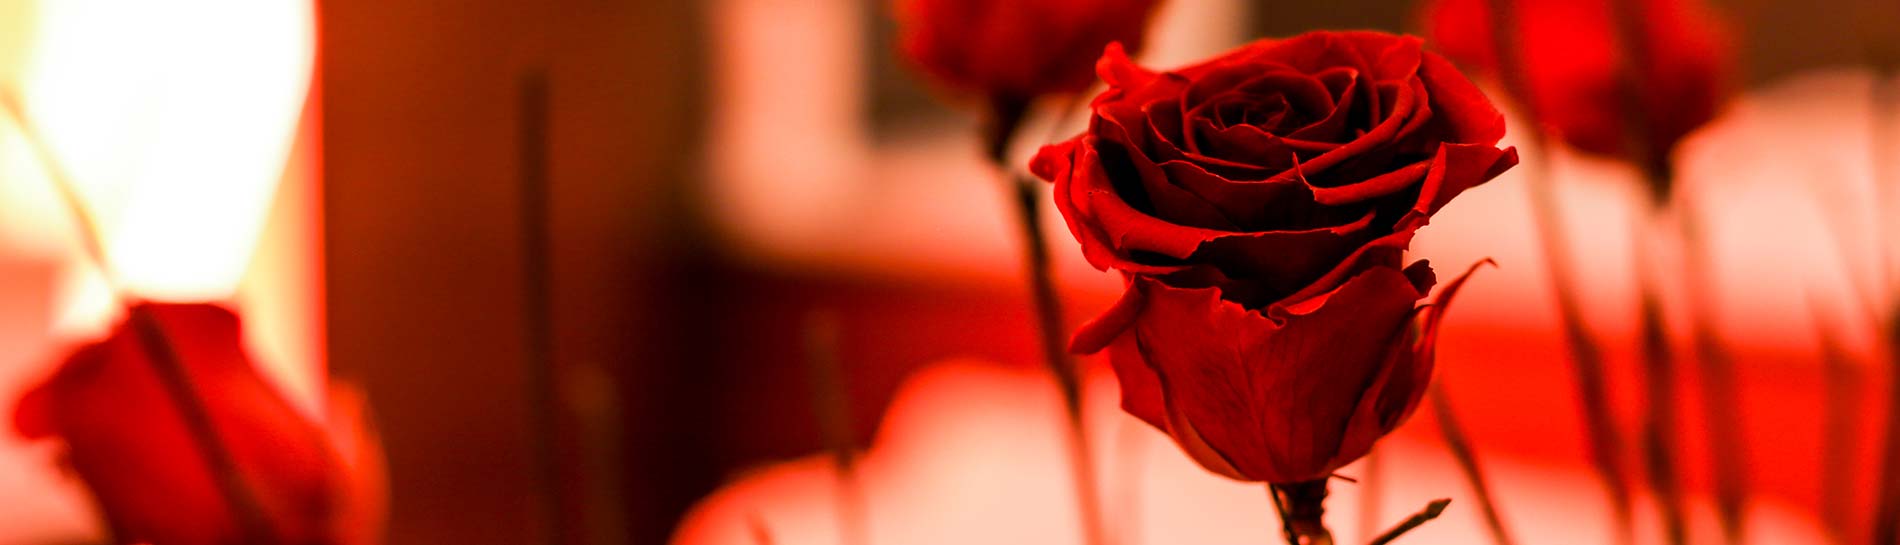 Valentine’s Day gift idea: romantic getaway at the Rosengarten Valentines Love